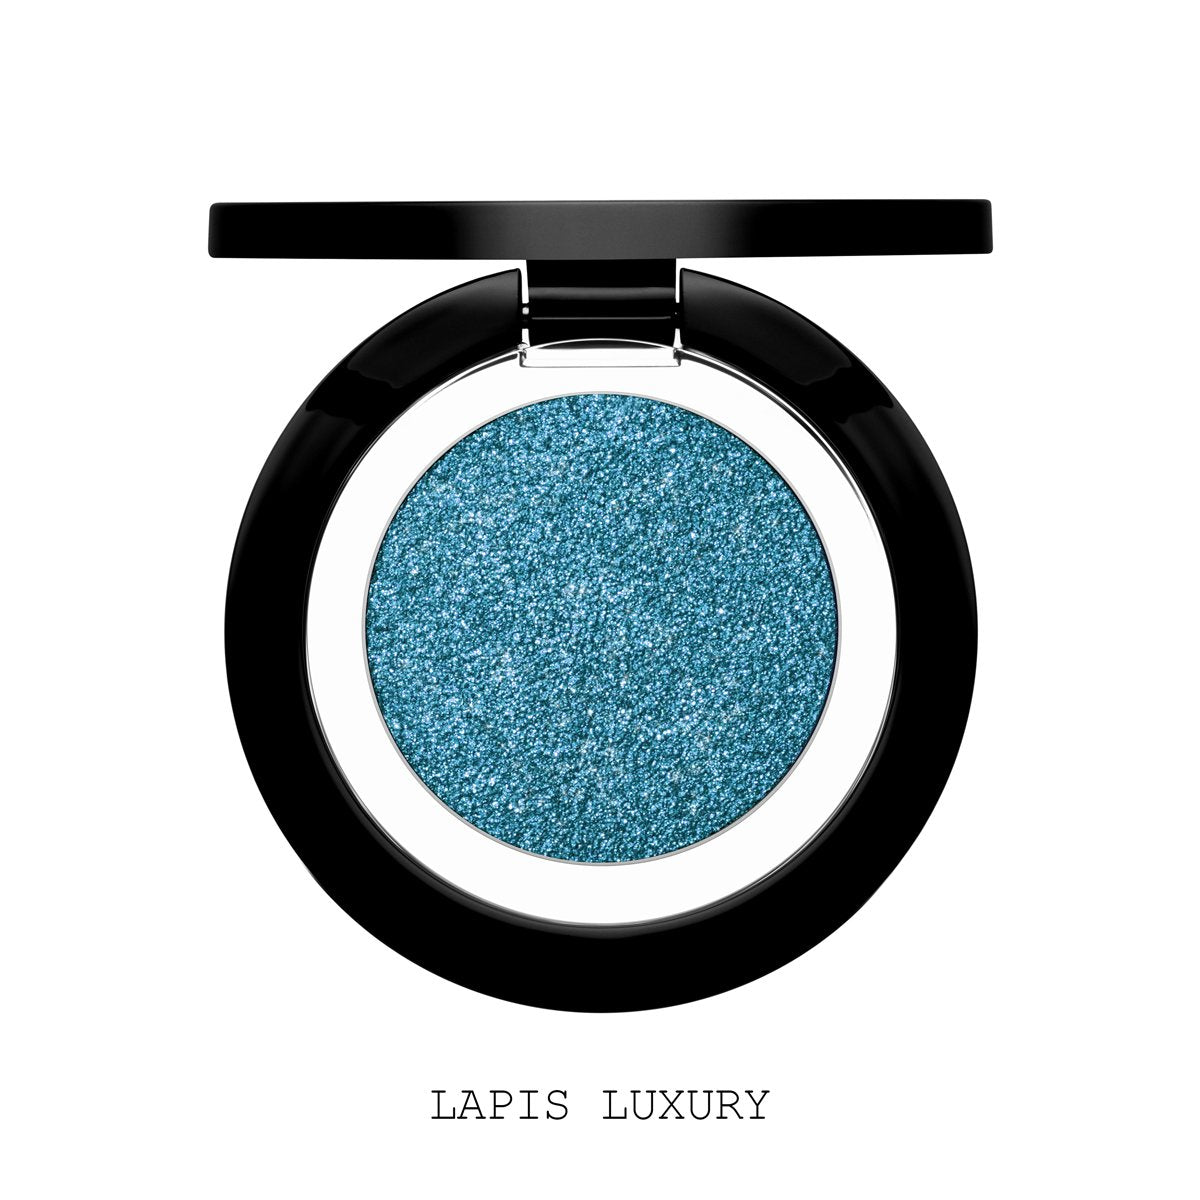 Pat McGrath EYEDOLS™ Metallic Eye Shadow - Lapis Luxury (Multidimensional Turquoise)